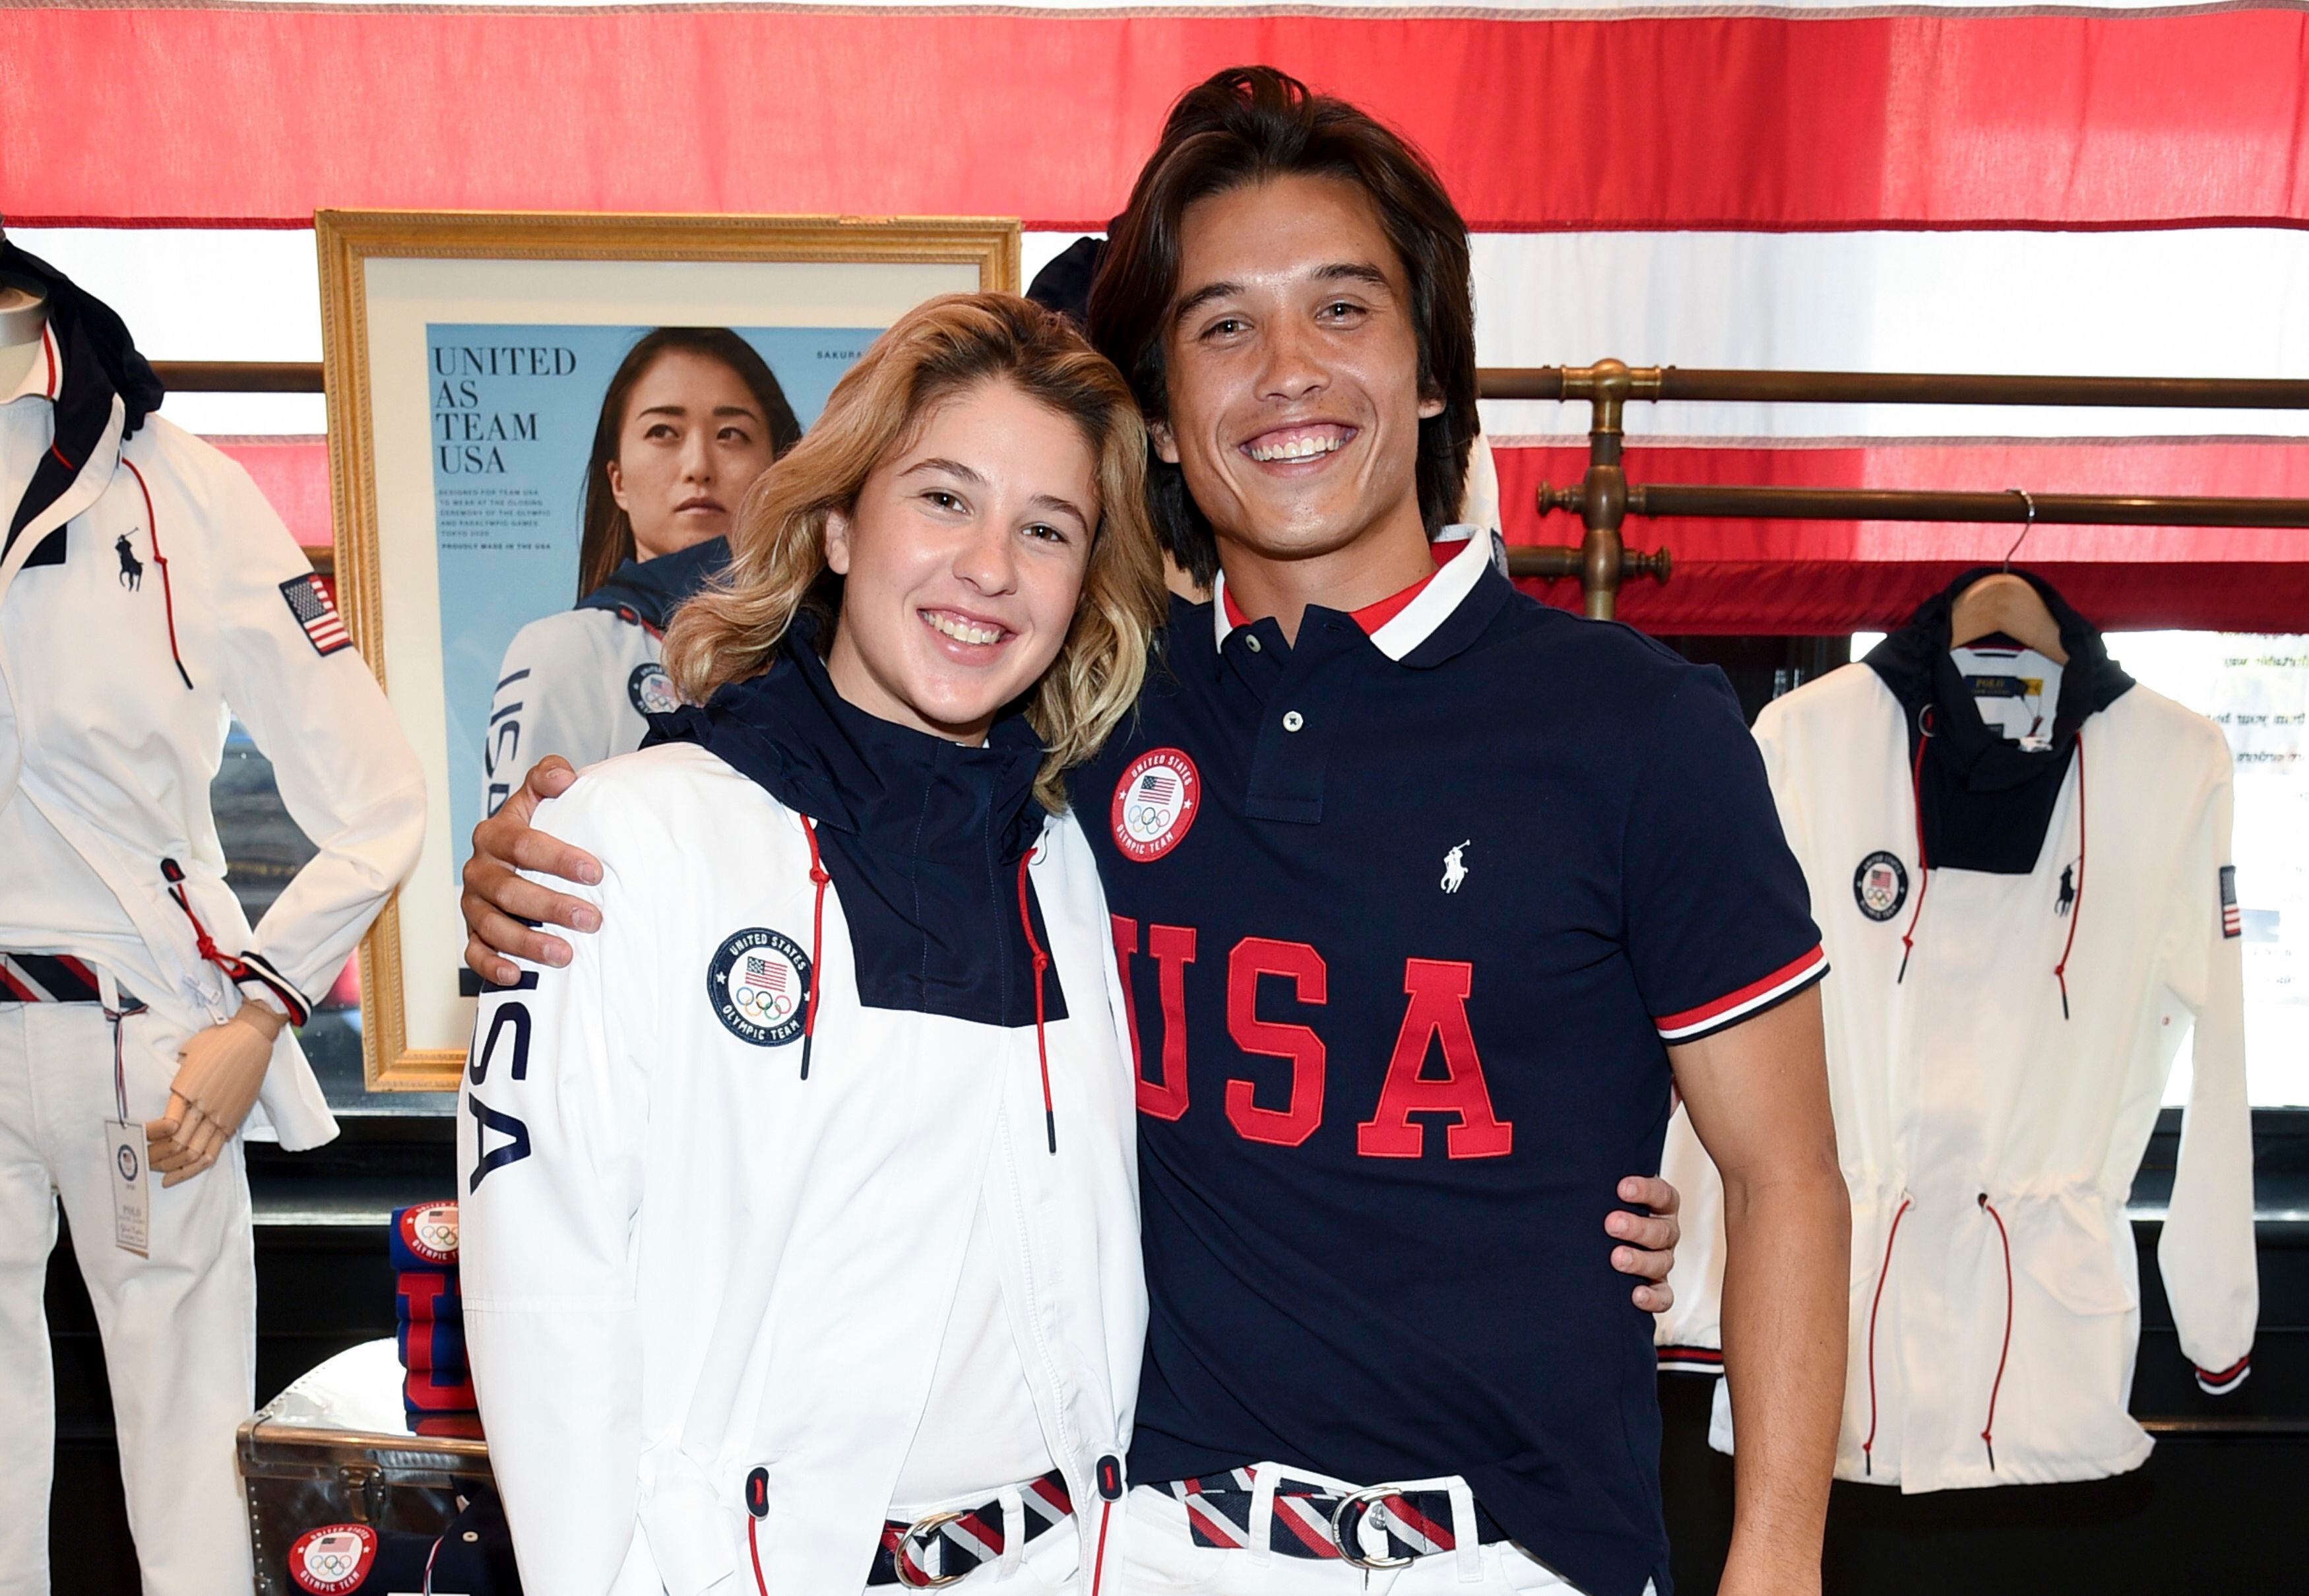 Ralph Lauren unveils crisp white Team USA Olympic uniforms